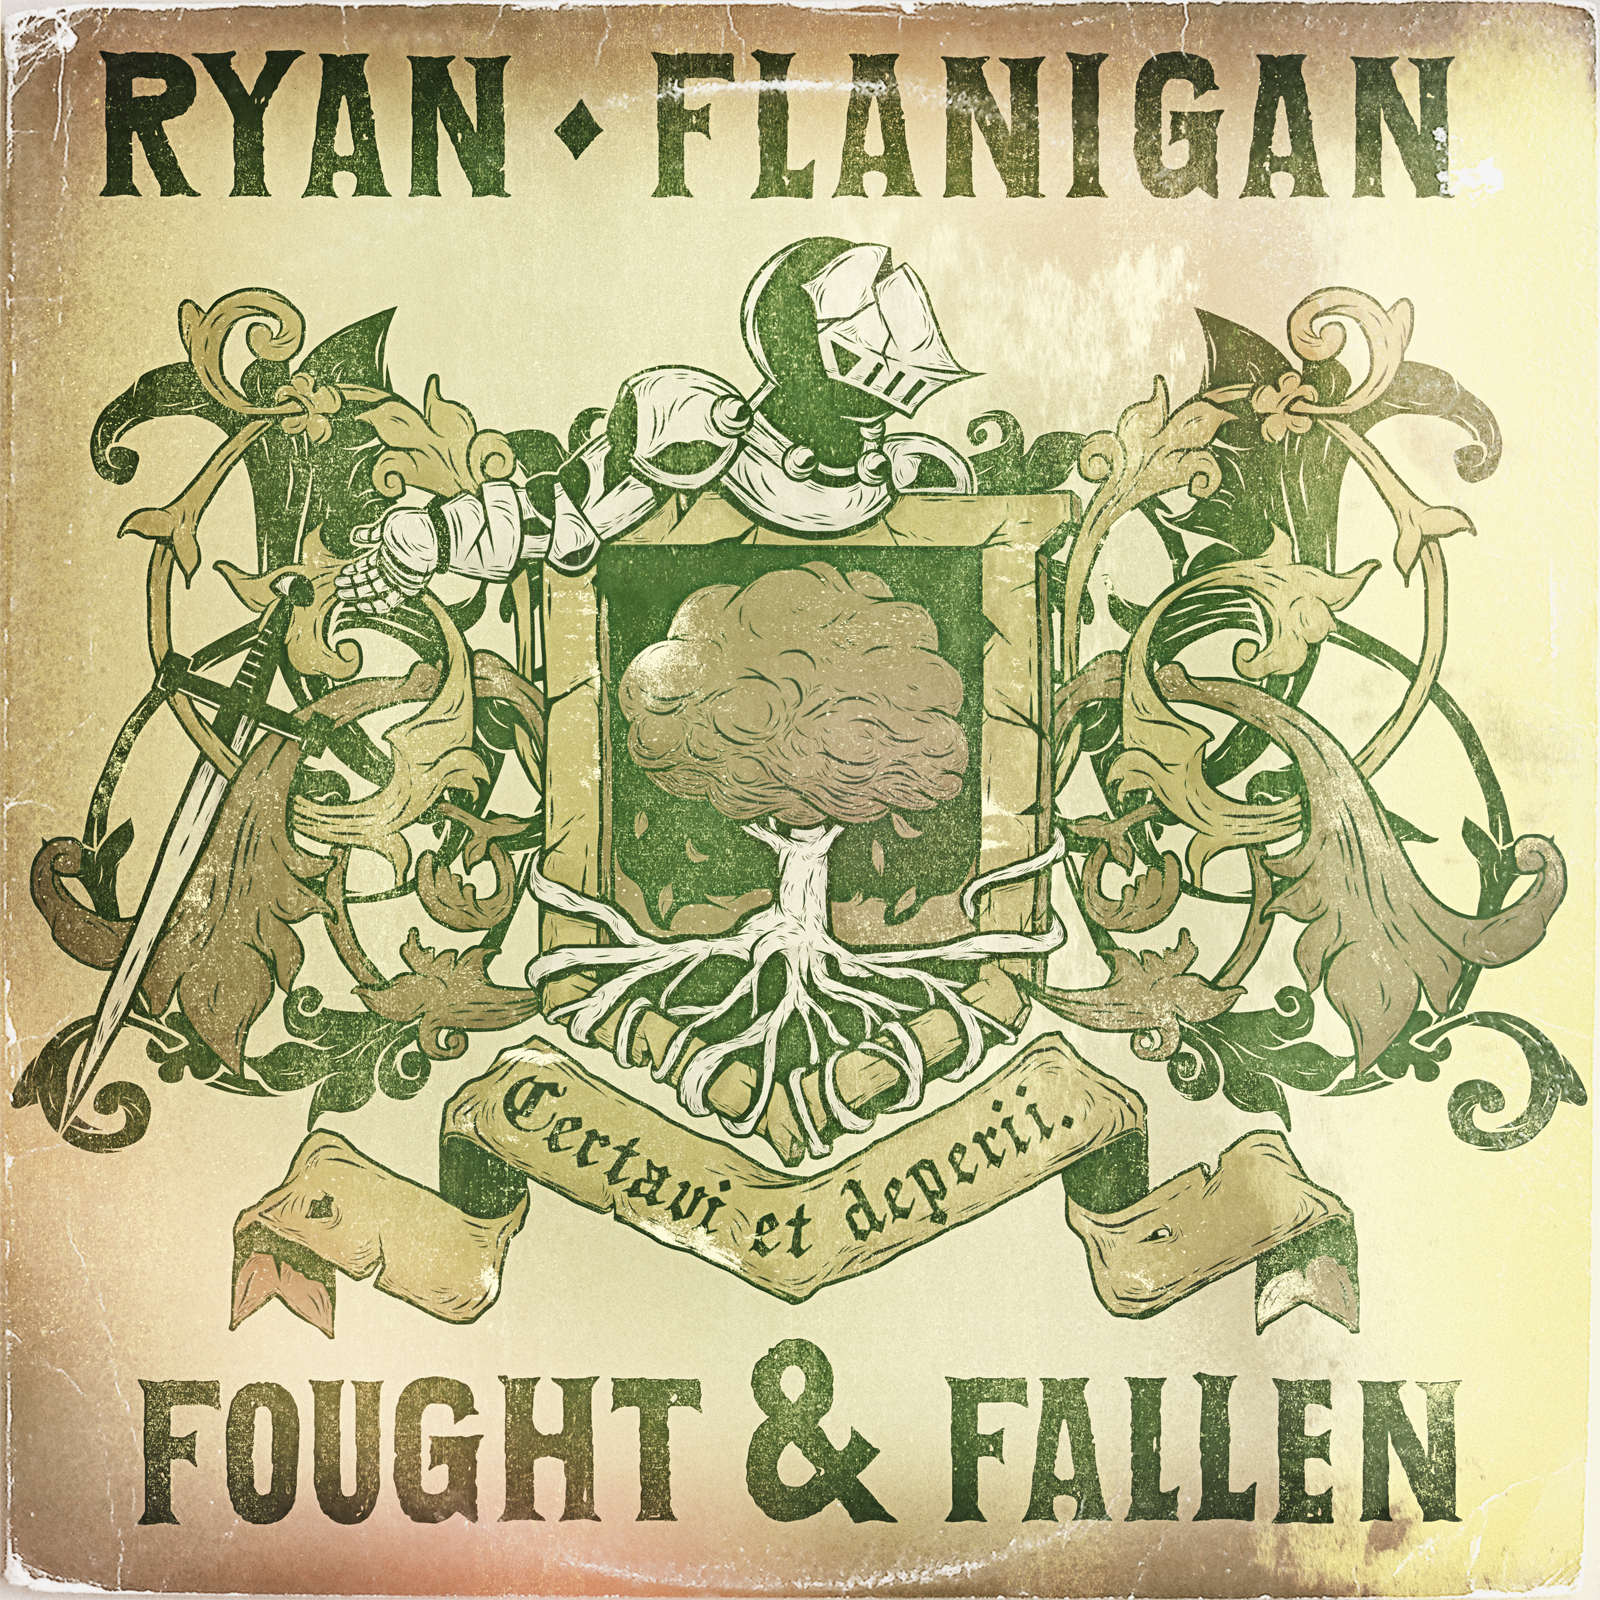 Fought &amp; Fallen by Ryan Flanigan